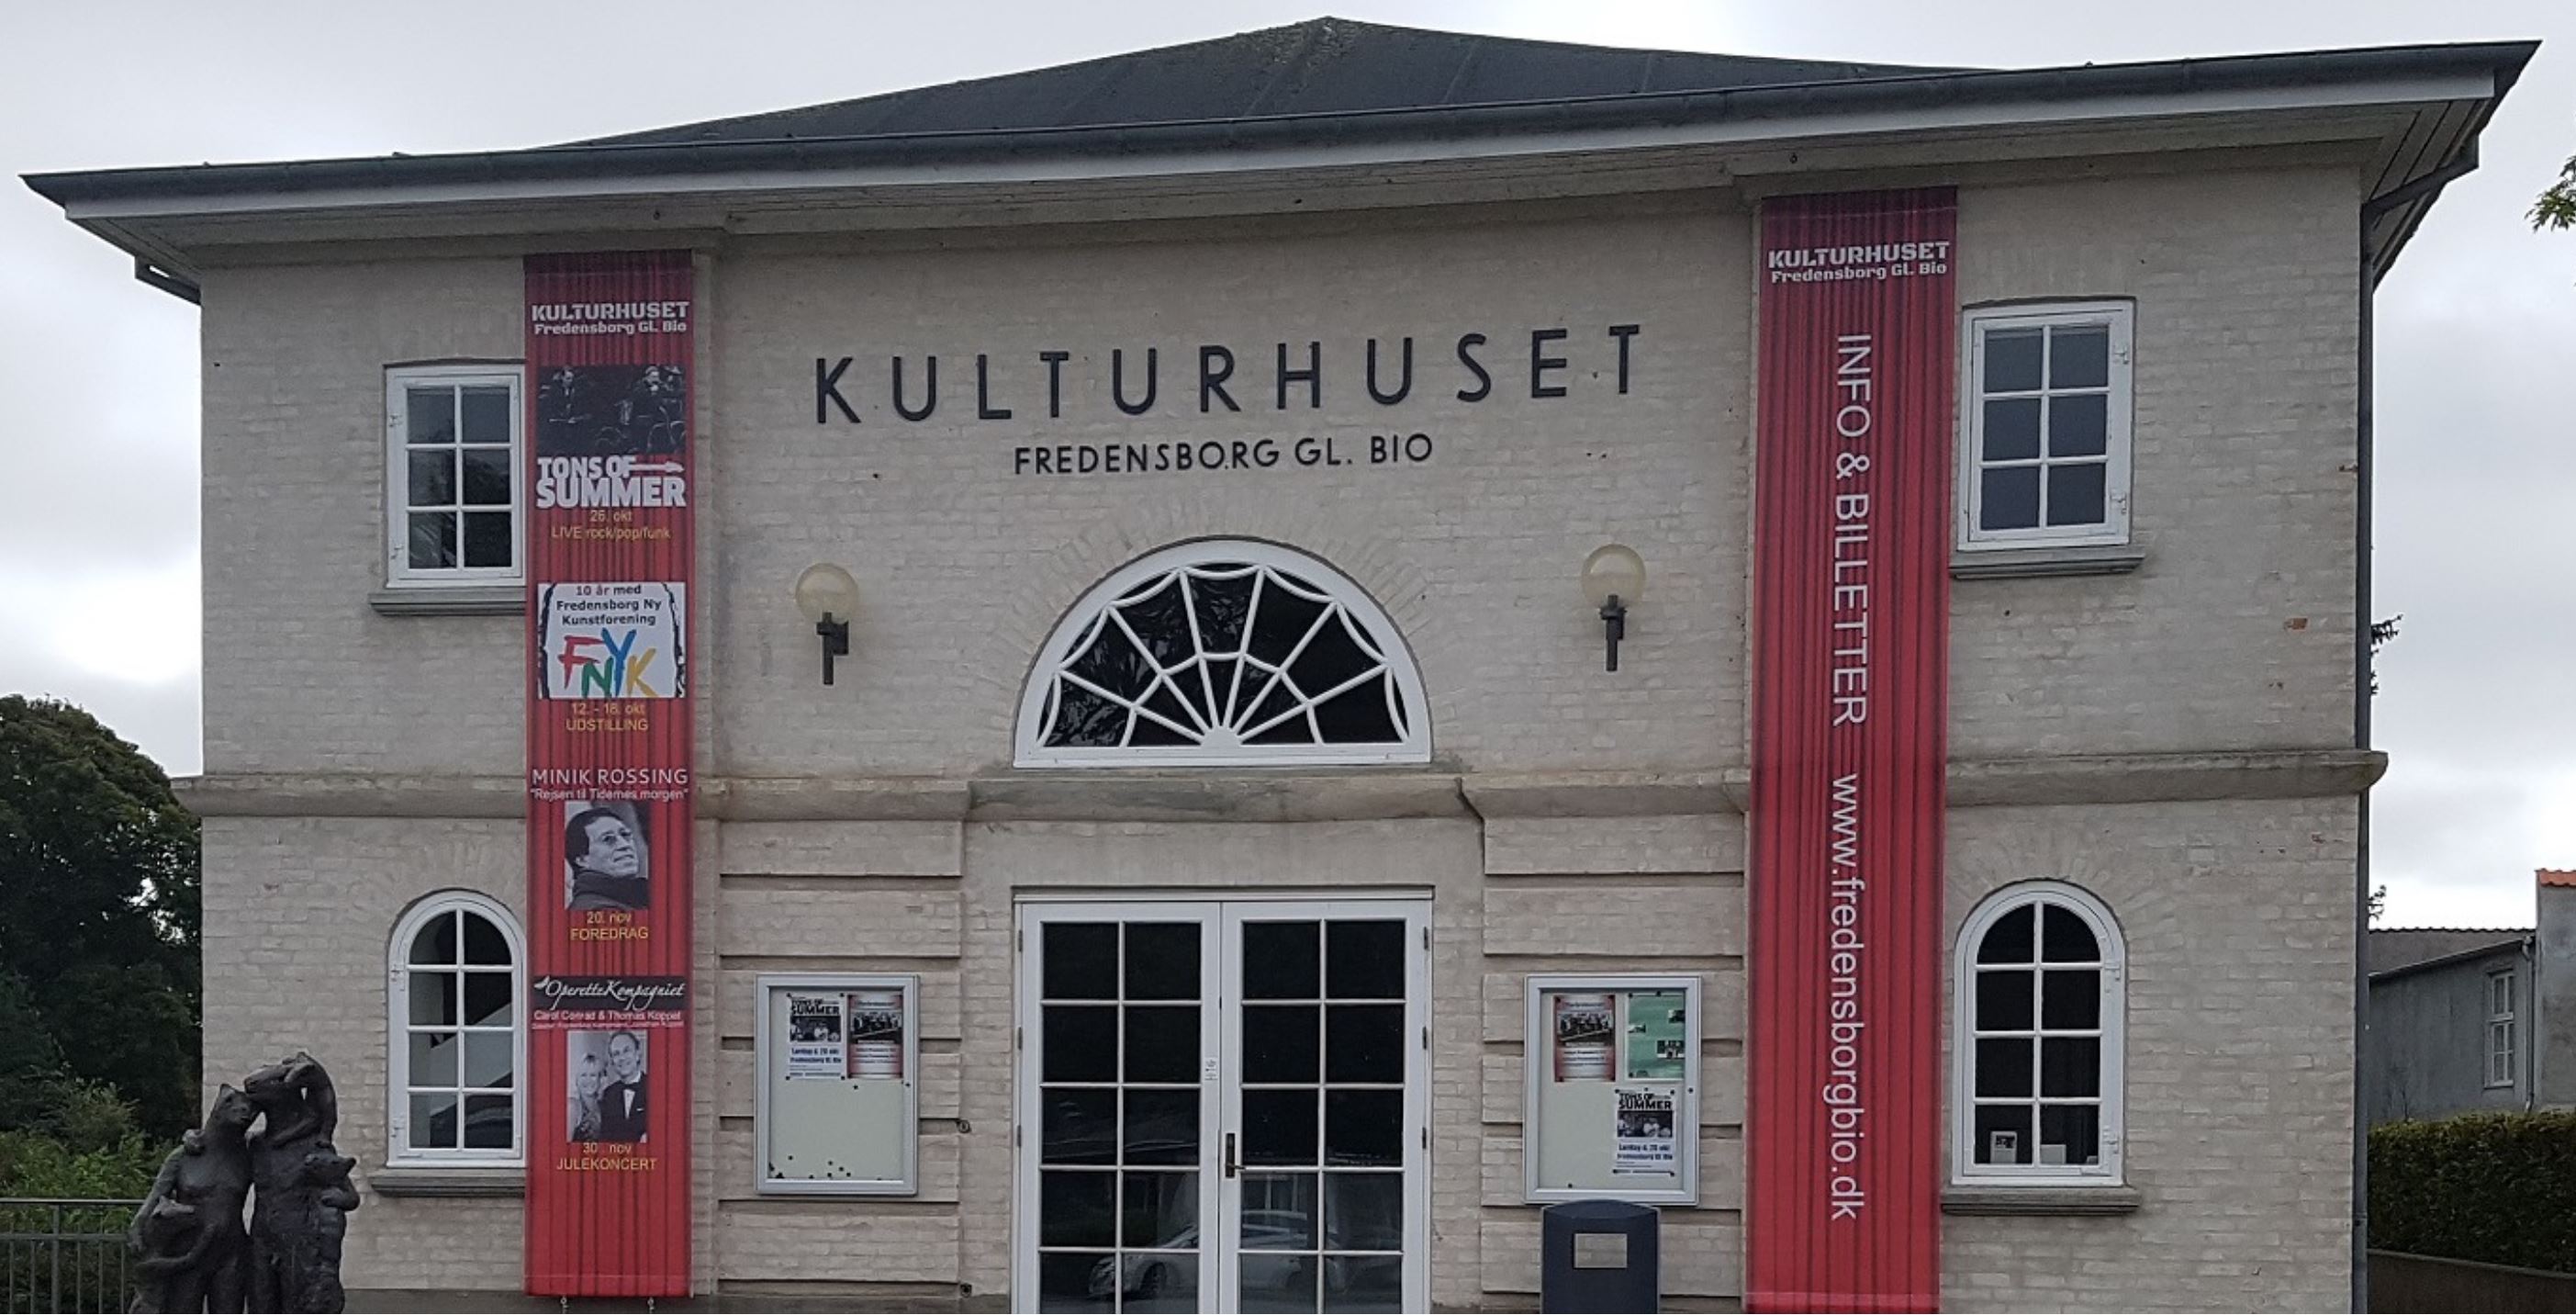 Kulturhuset Fredensborg Gamle Bio